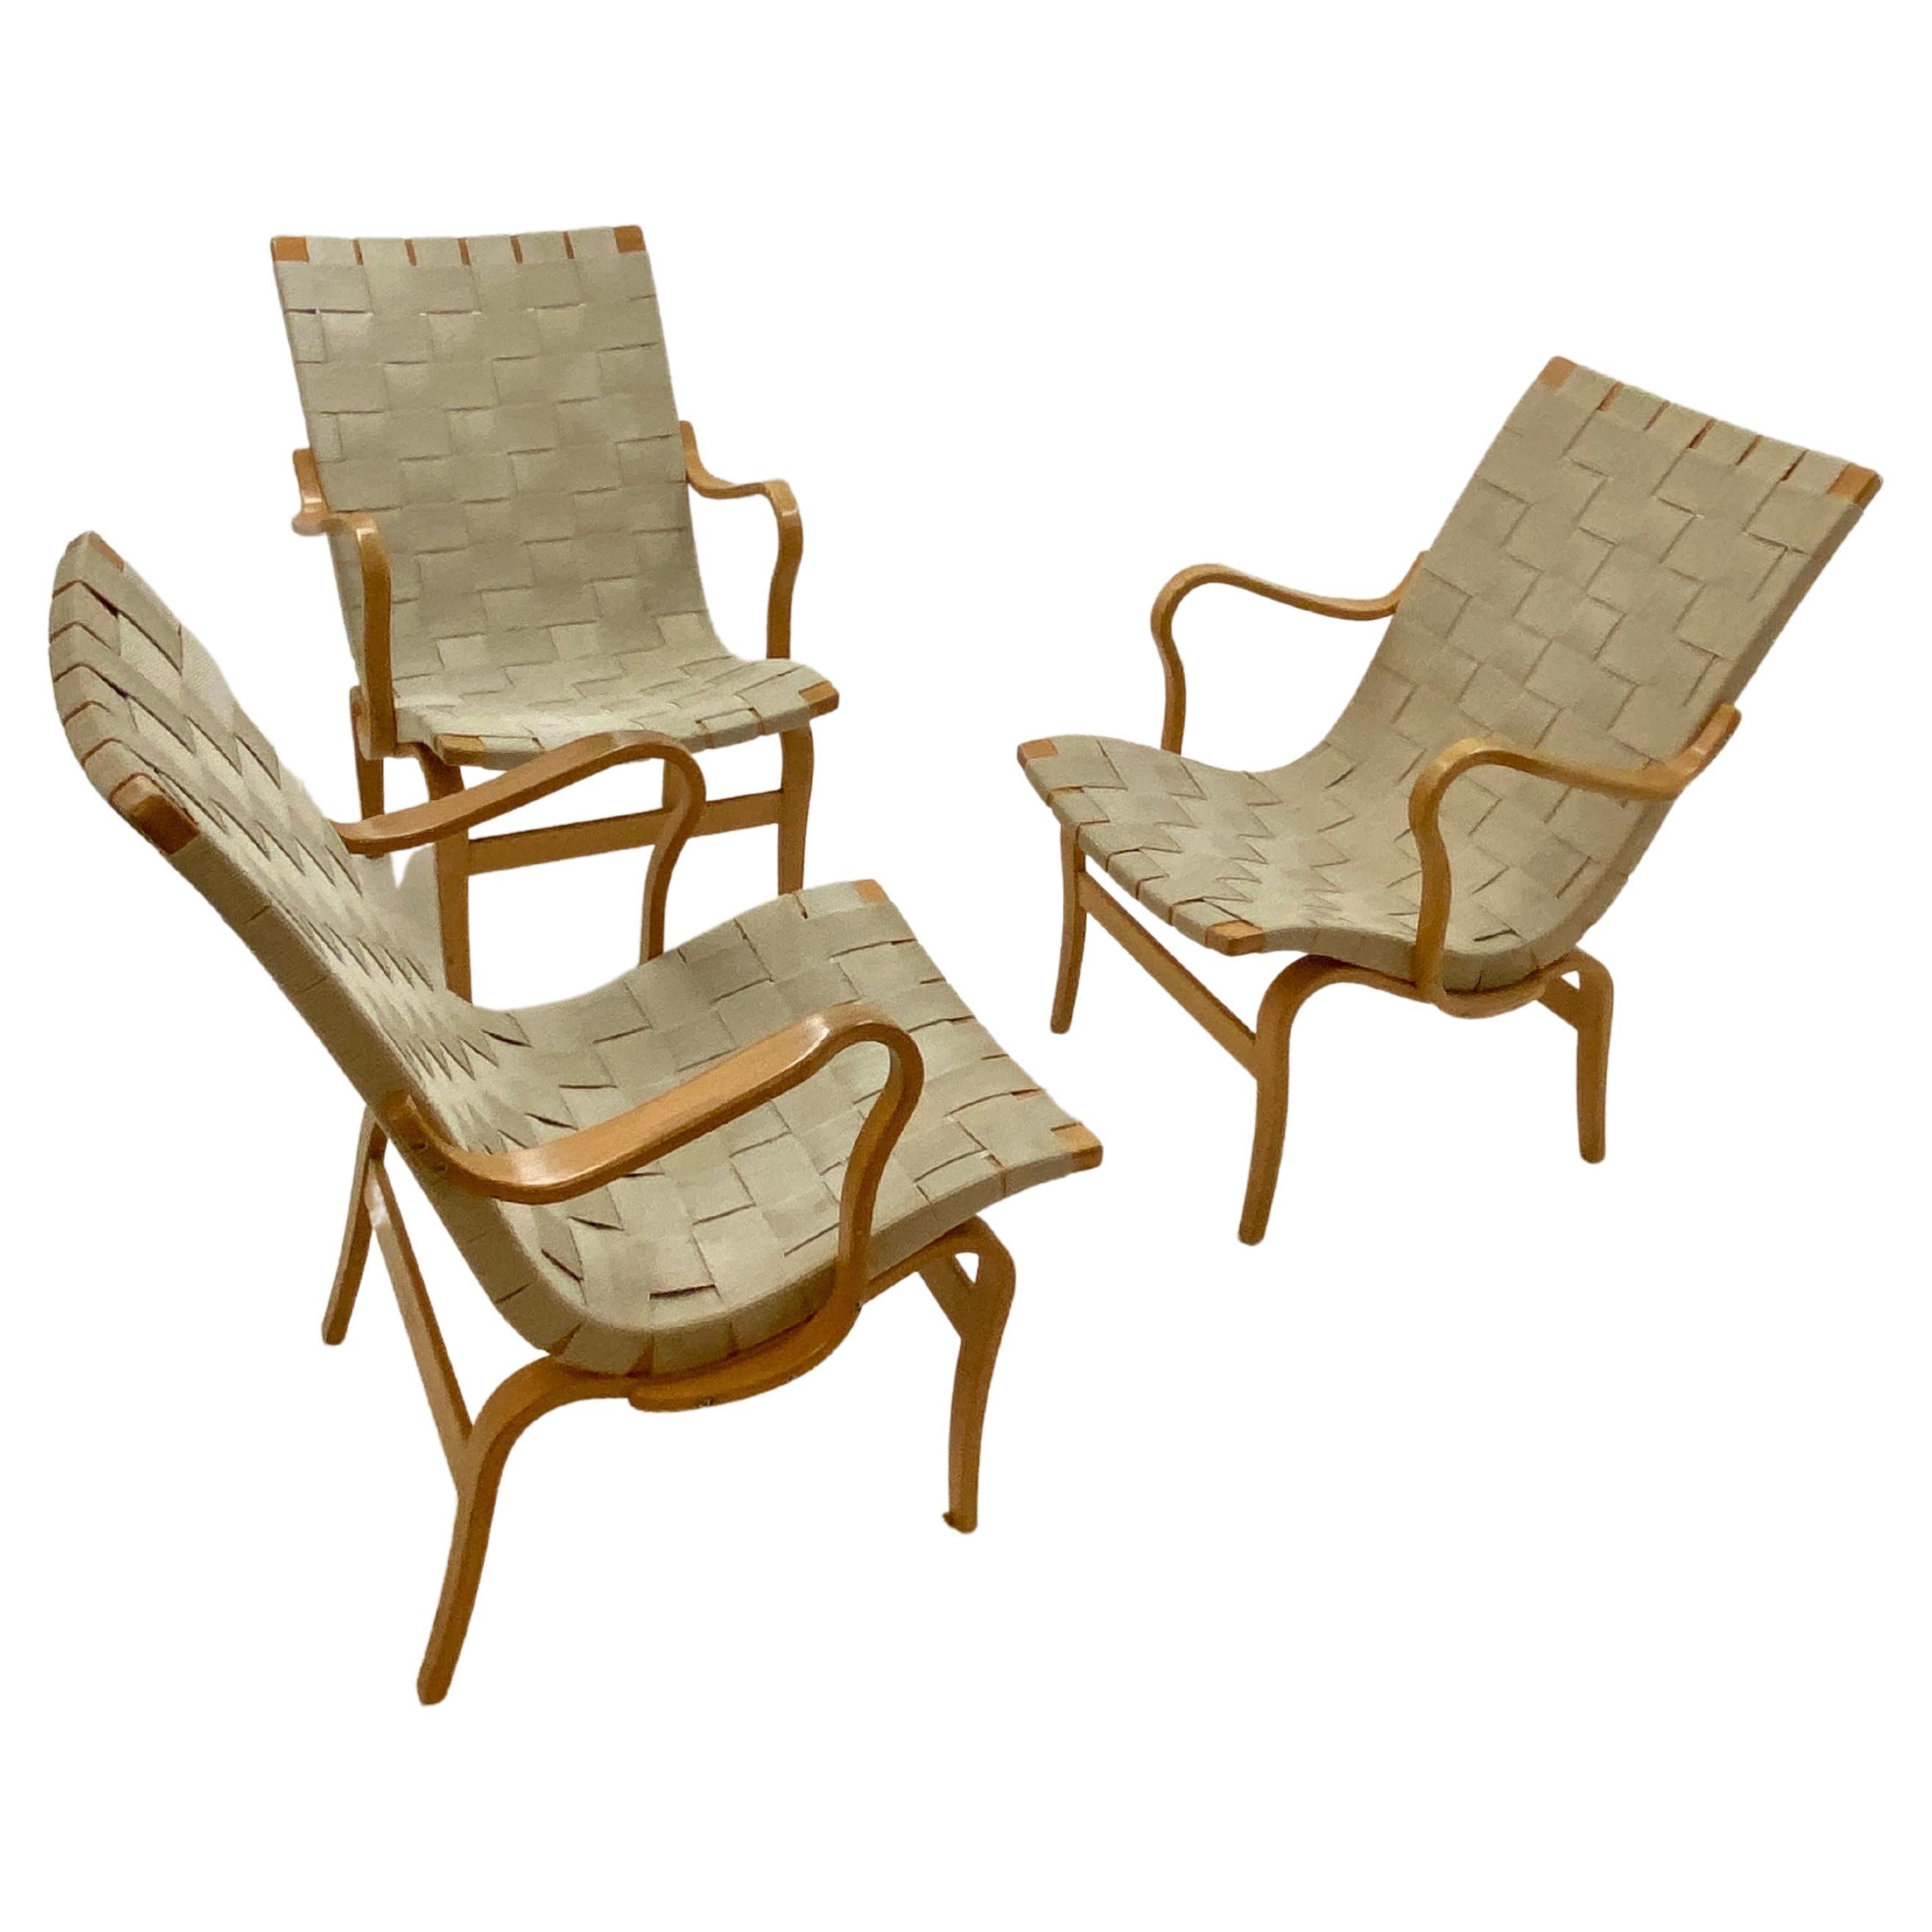  "Eva" Lounge Chair by Dux Created by Bruno Mathsson 1960s Scandinavian Modern